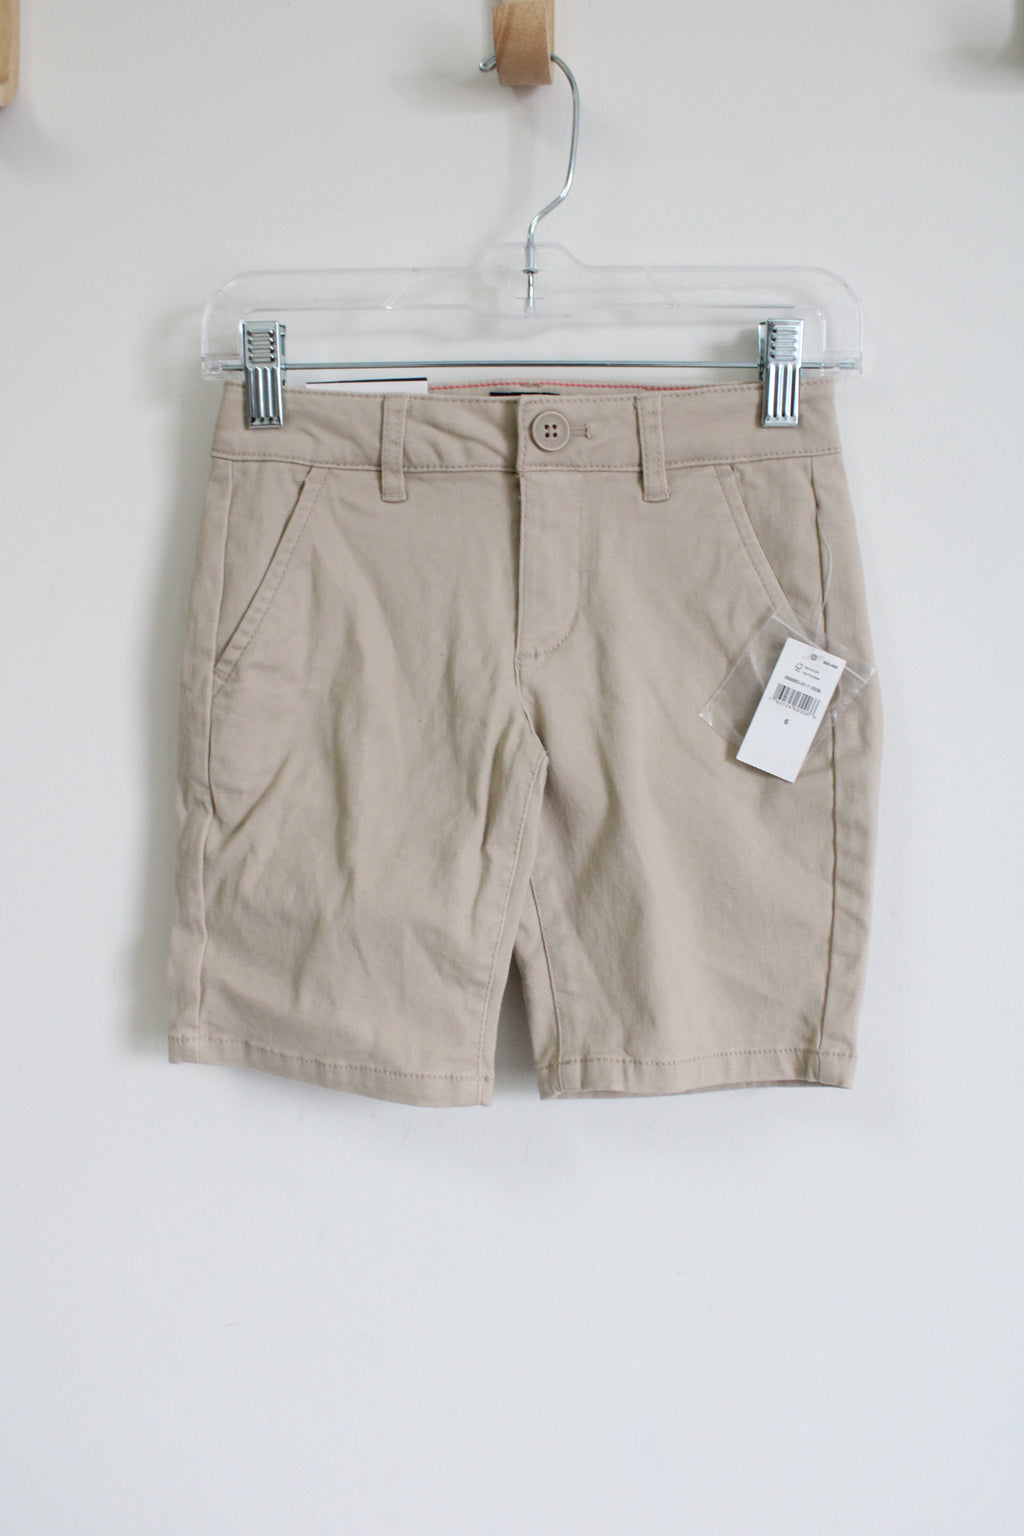 NEW Gap Kids Tan Regular Fit Shorts | 6